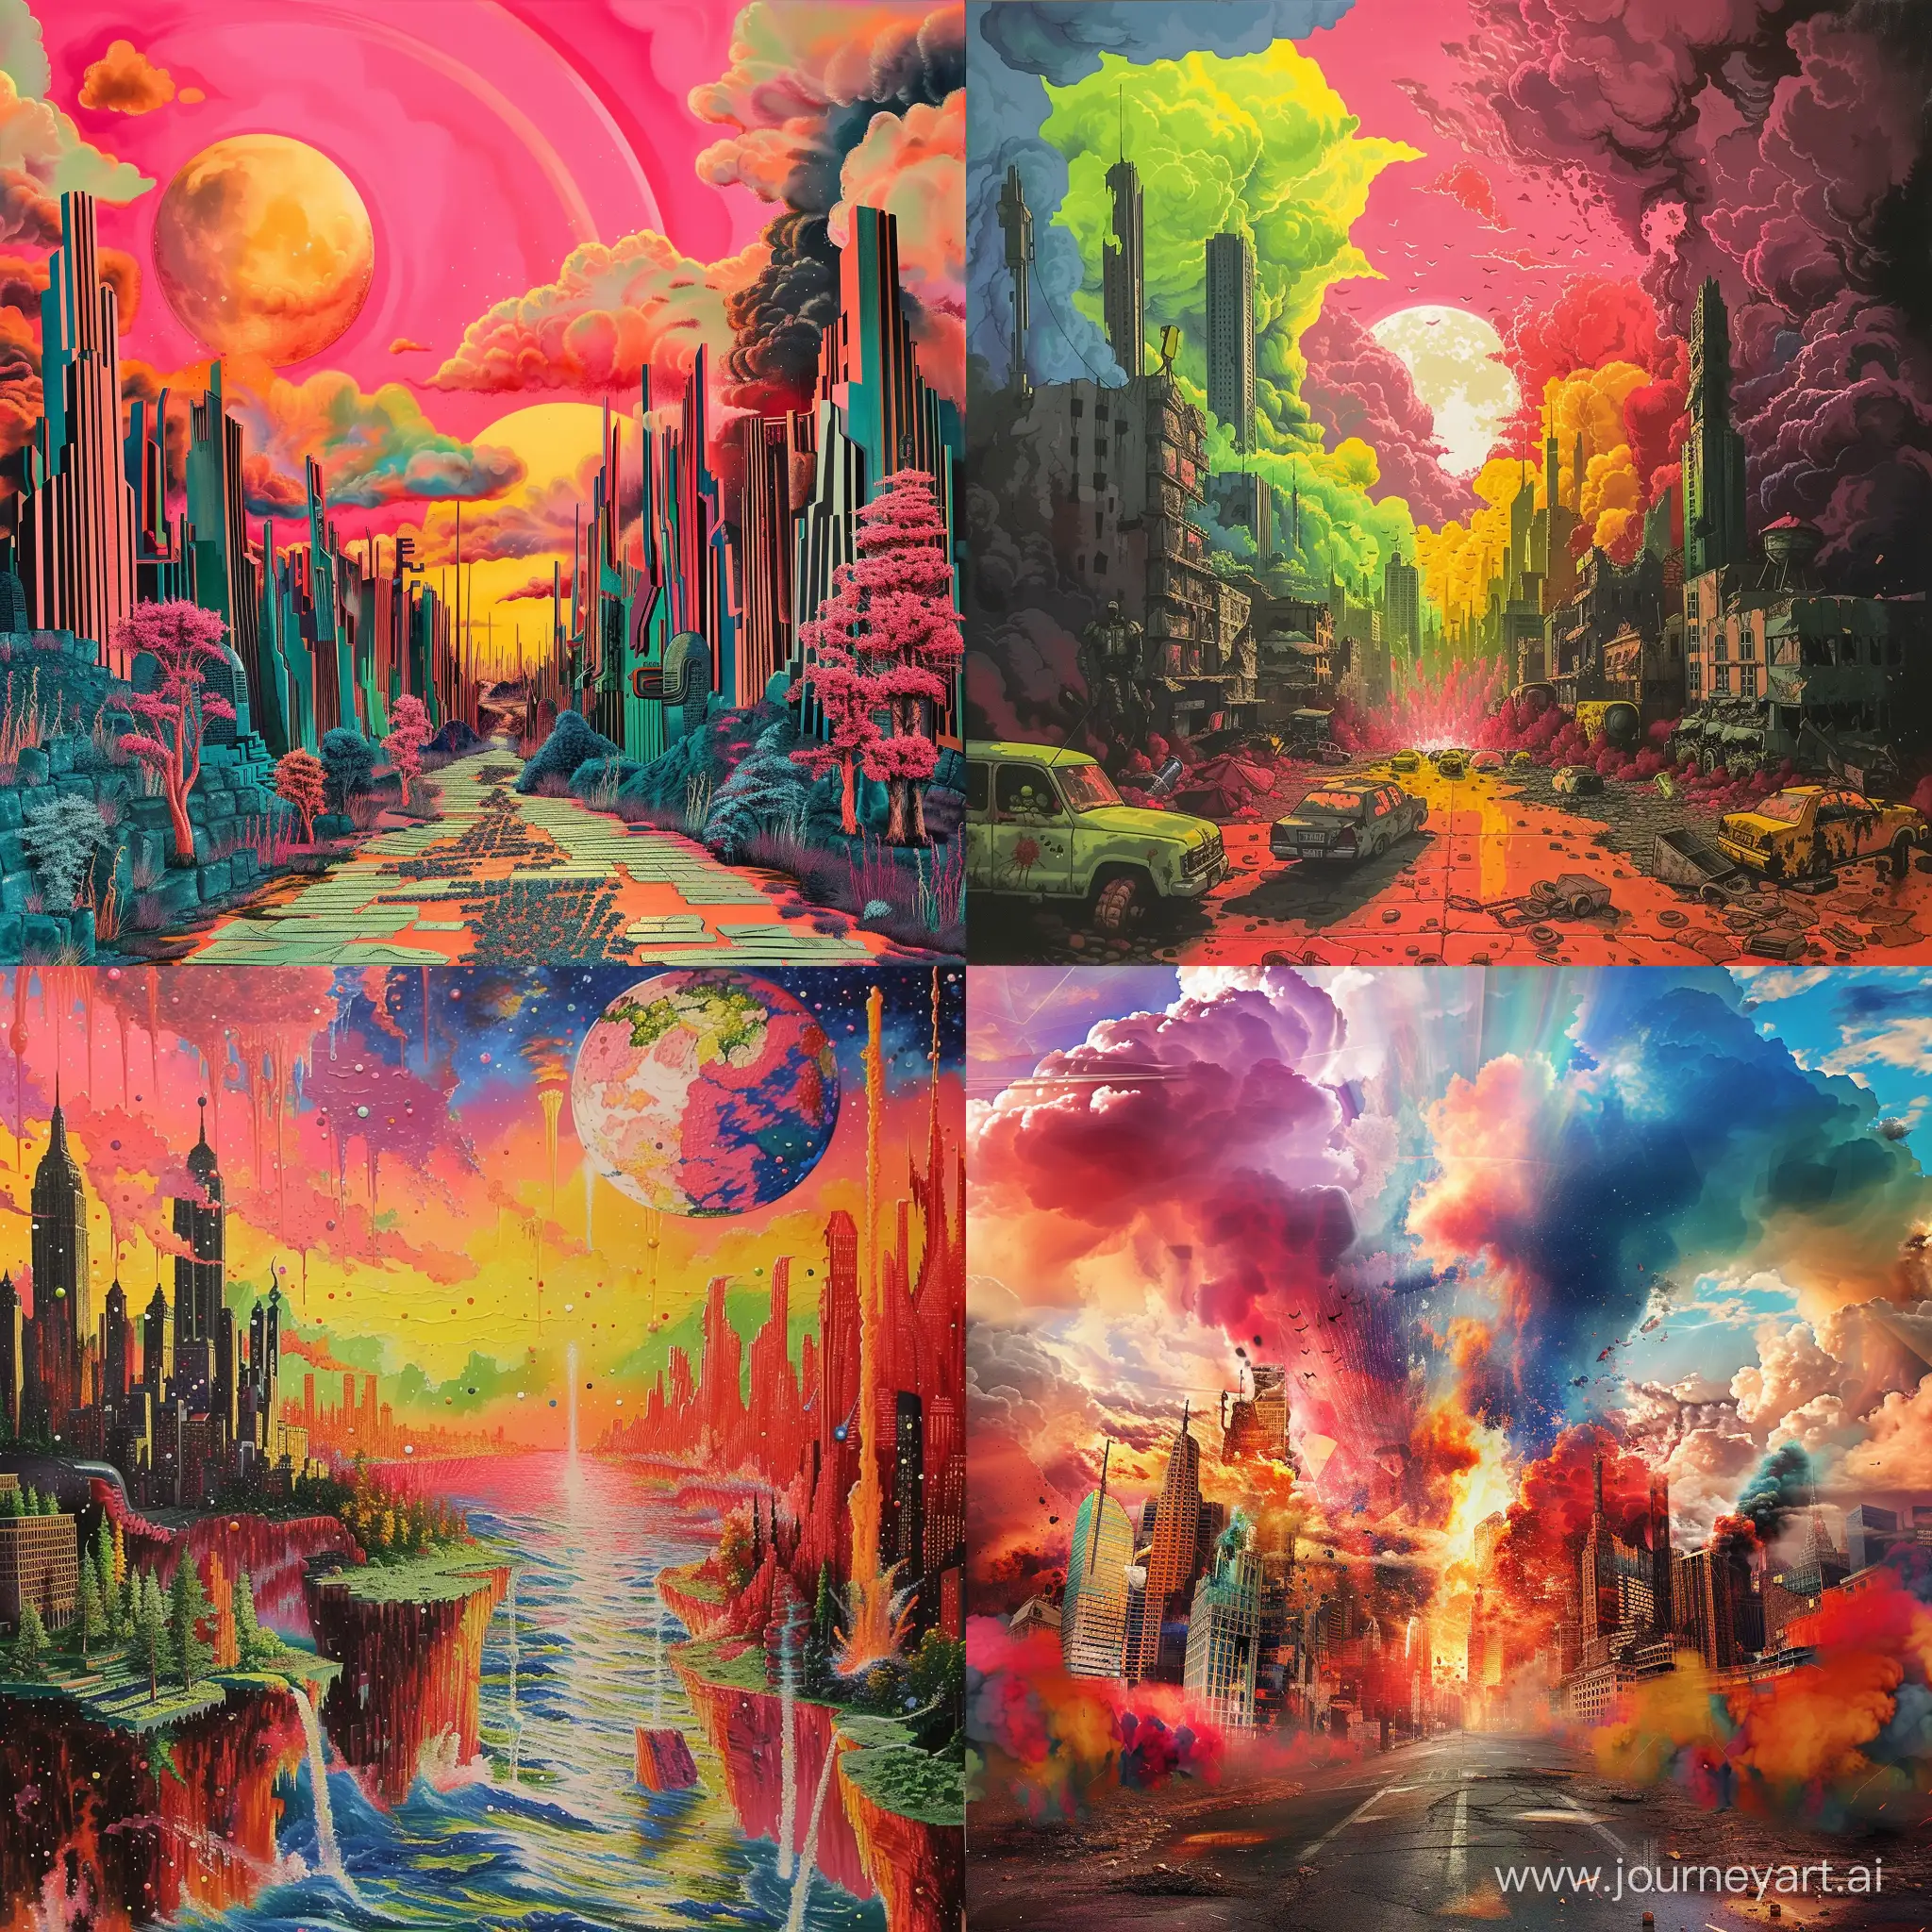 Vibrant-Apocalypse-Art-with-Bright-Colors